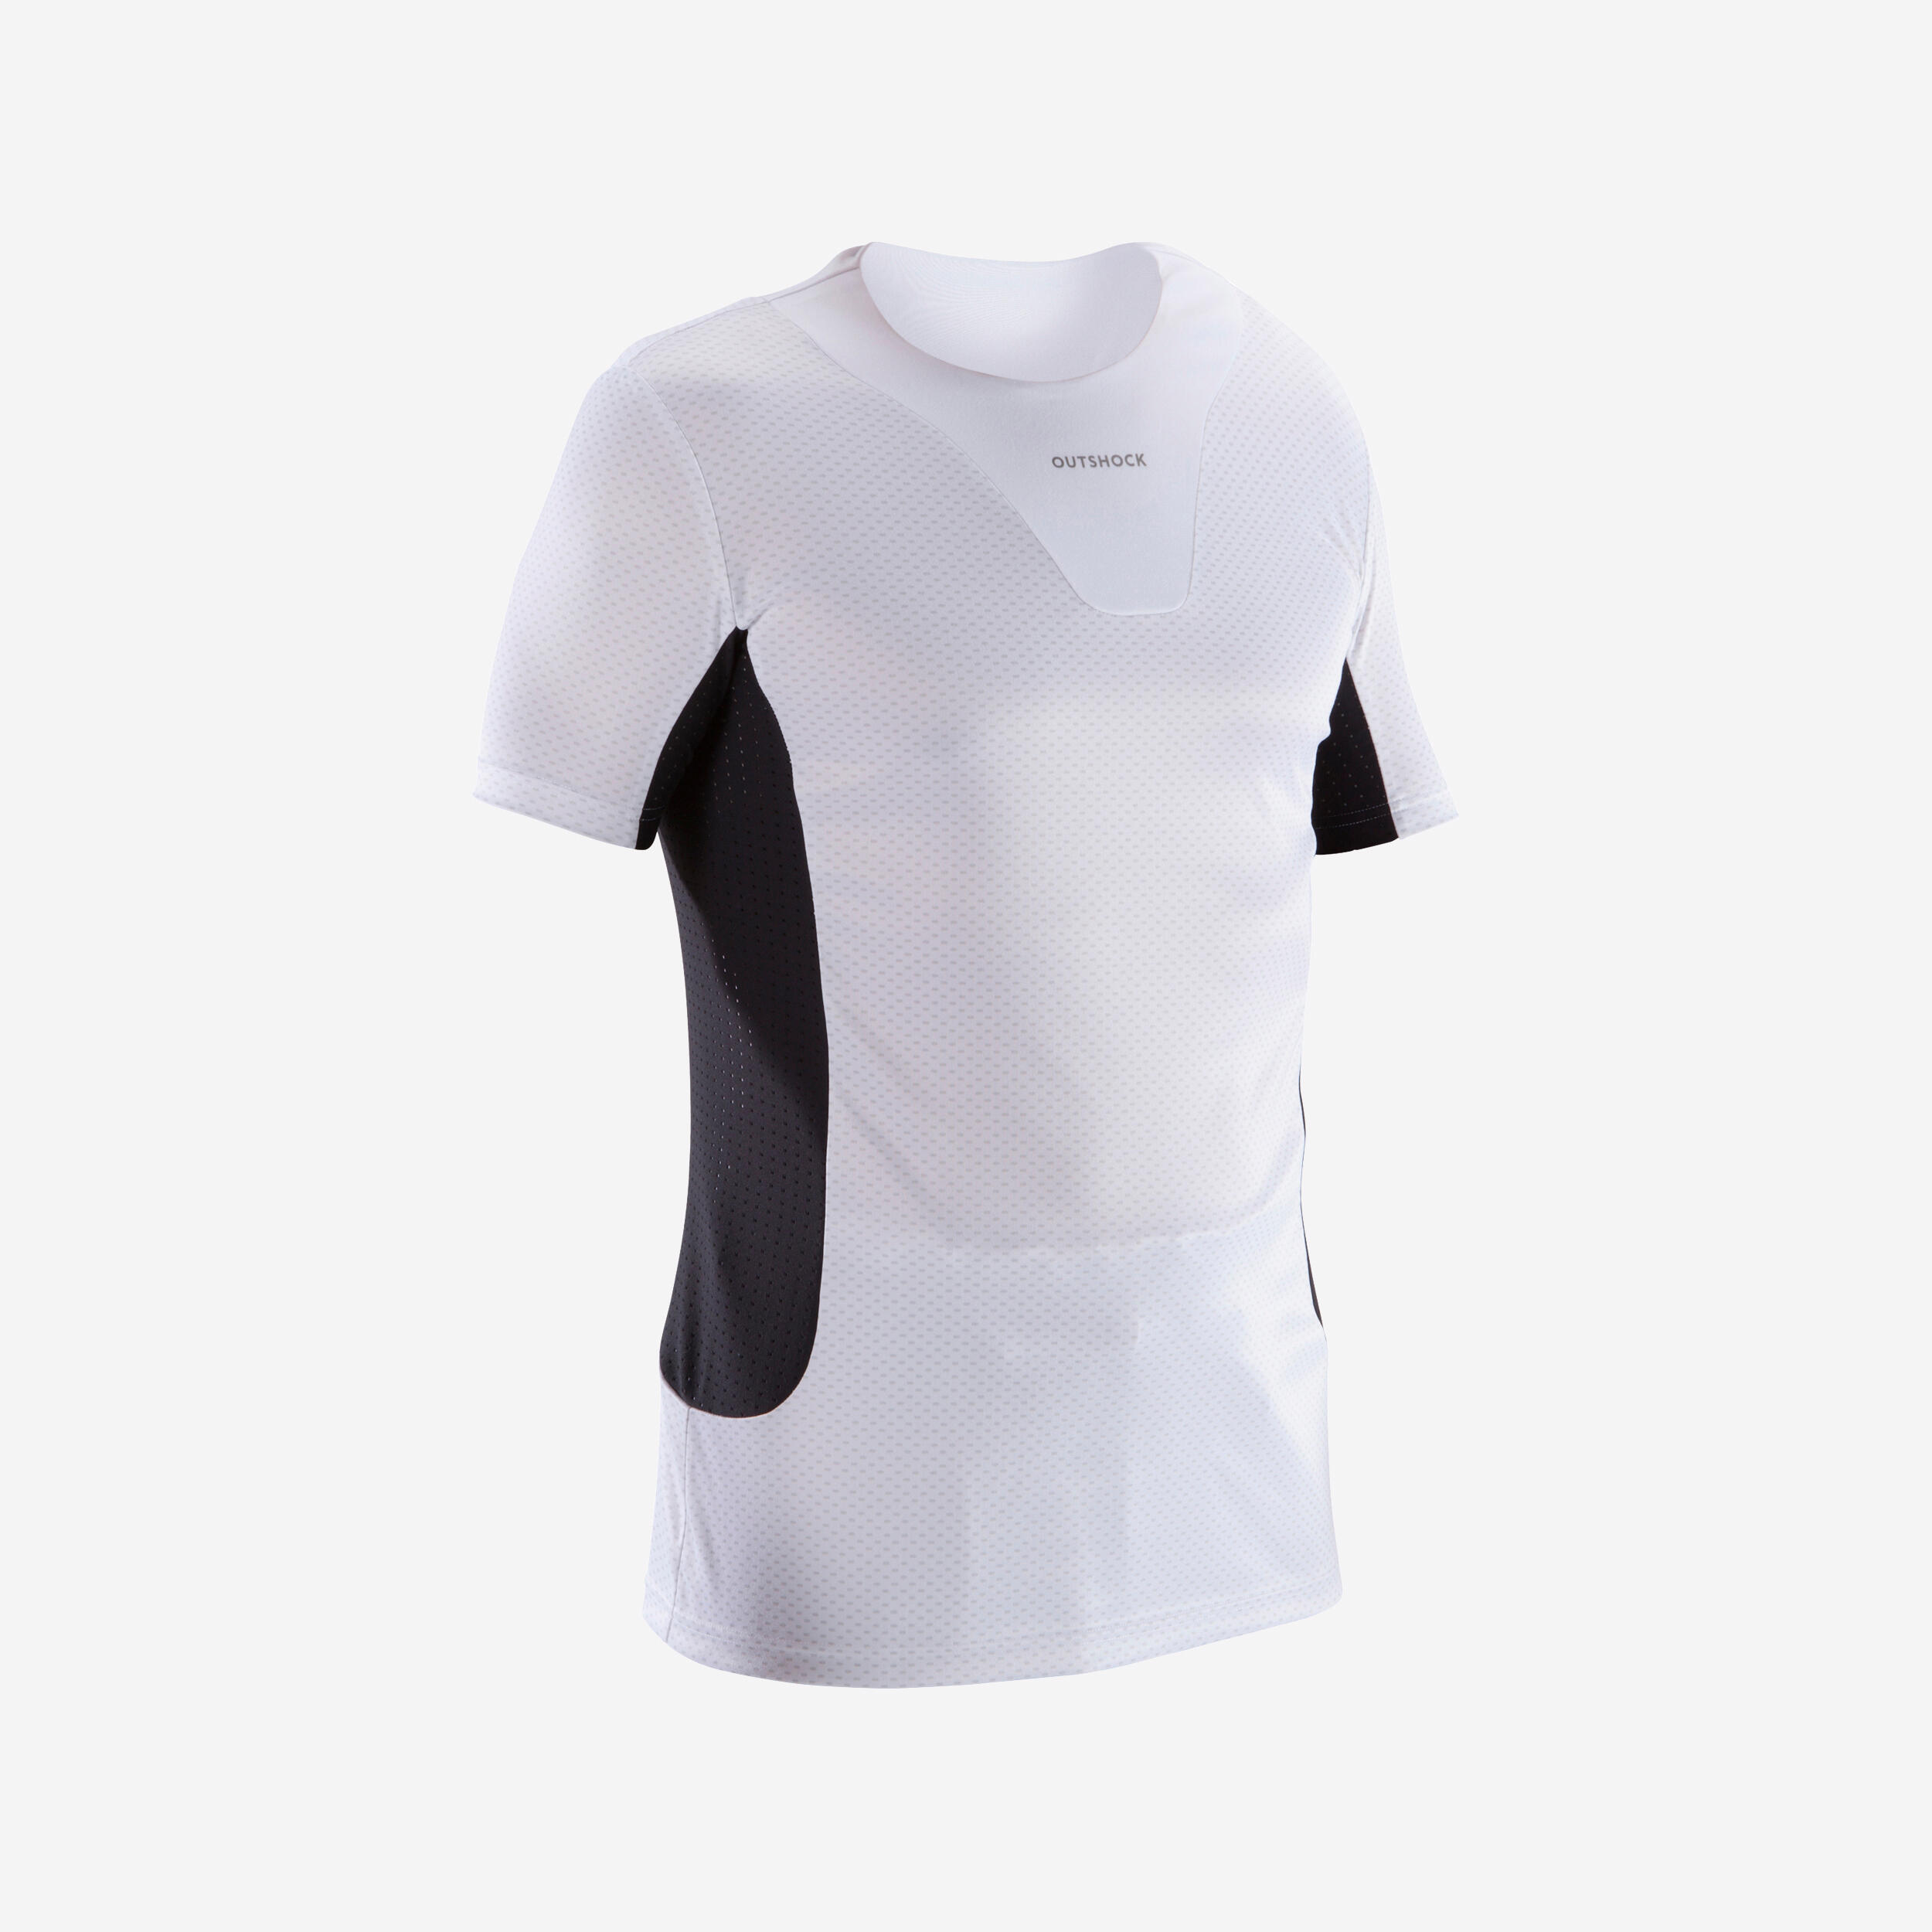 OUTSHOCK Adult Judo Base Layer T-Shirt - White/Black